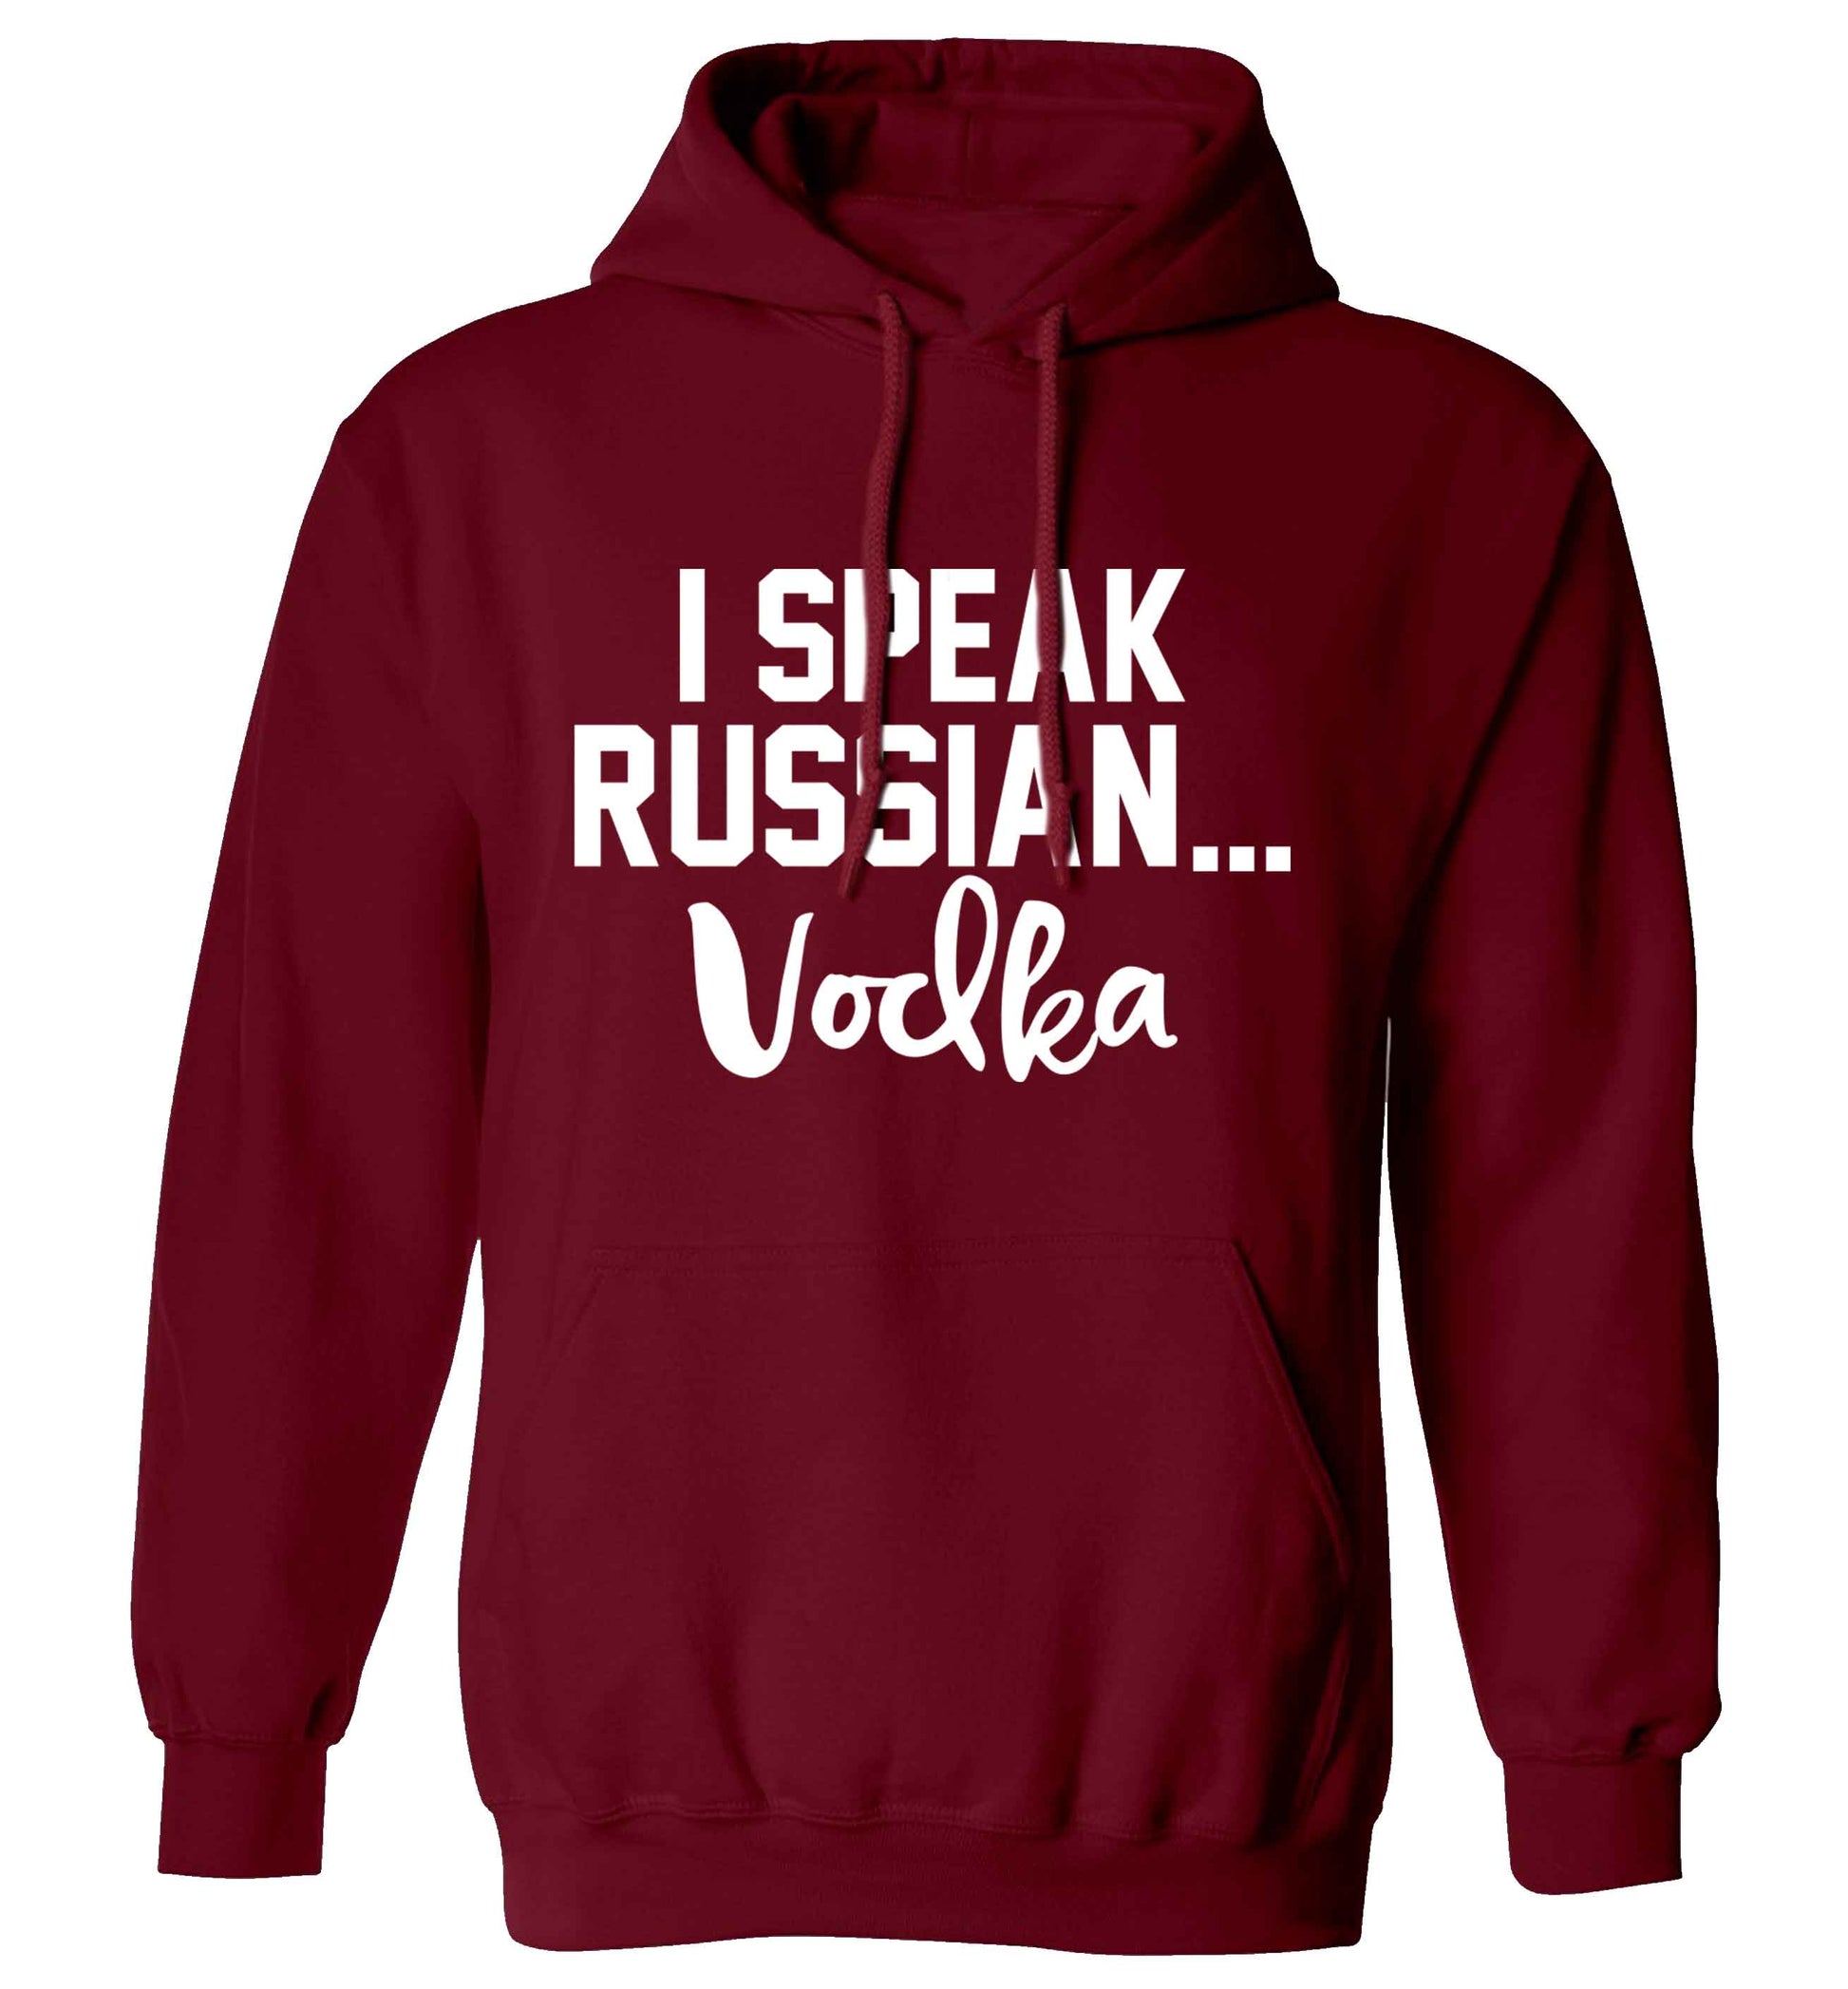 I speak russian...vodka adults unisex maroon hoodie 2XL